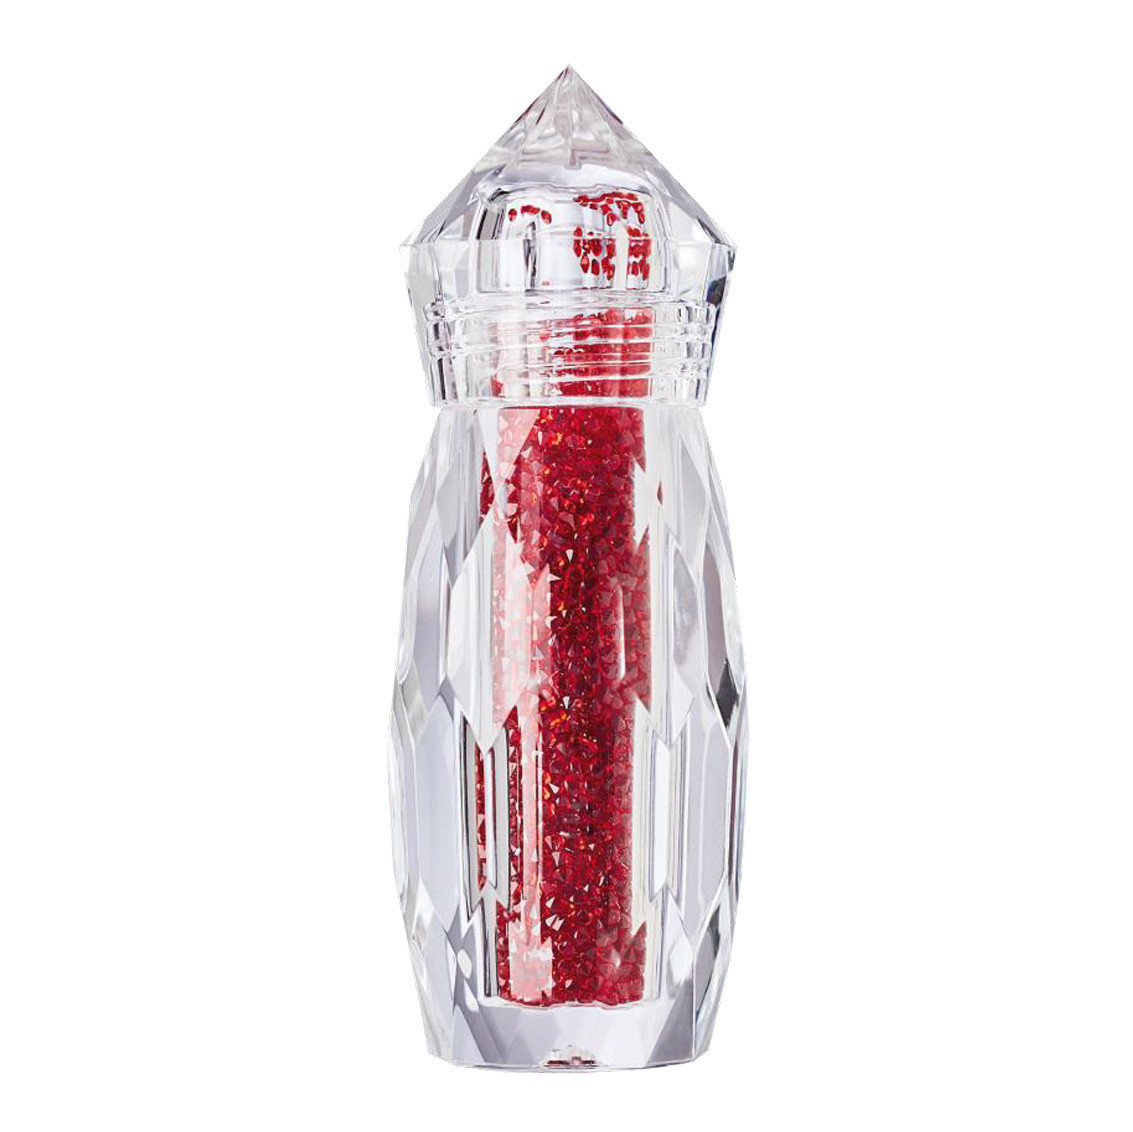 Nailart-Box Swarovski®  Crystalpixie Red Touch mit Nagellack